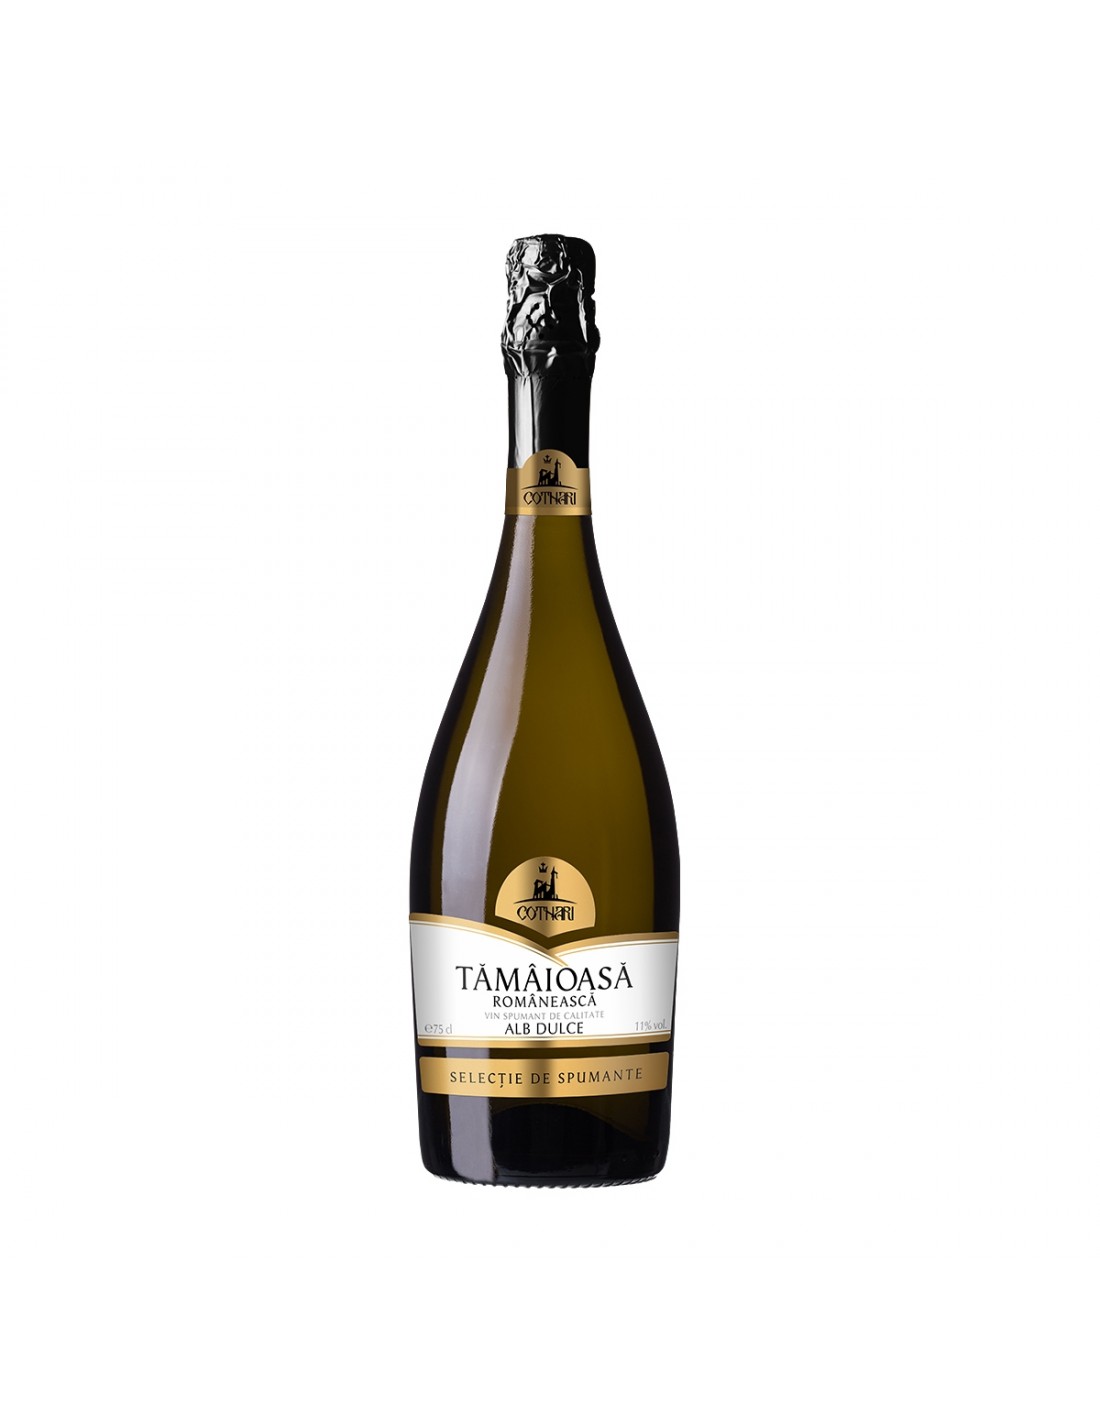 Vin spumant alb dulce, Tamaioasa Romaneasca, Cotnari, 11% alc., 0.75 L, Romania alcooldiscount.ro